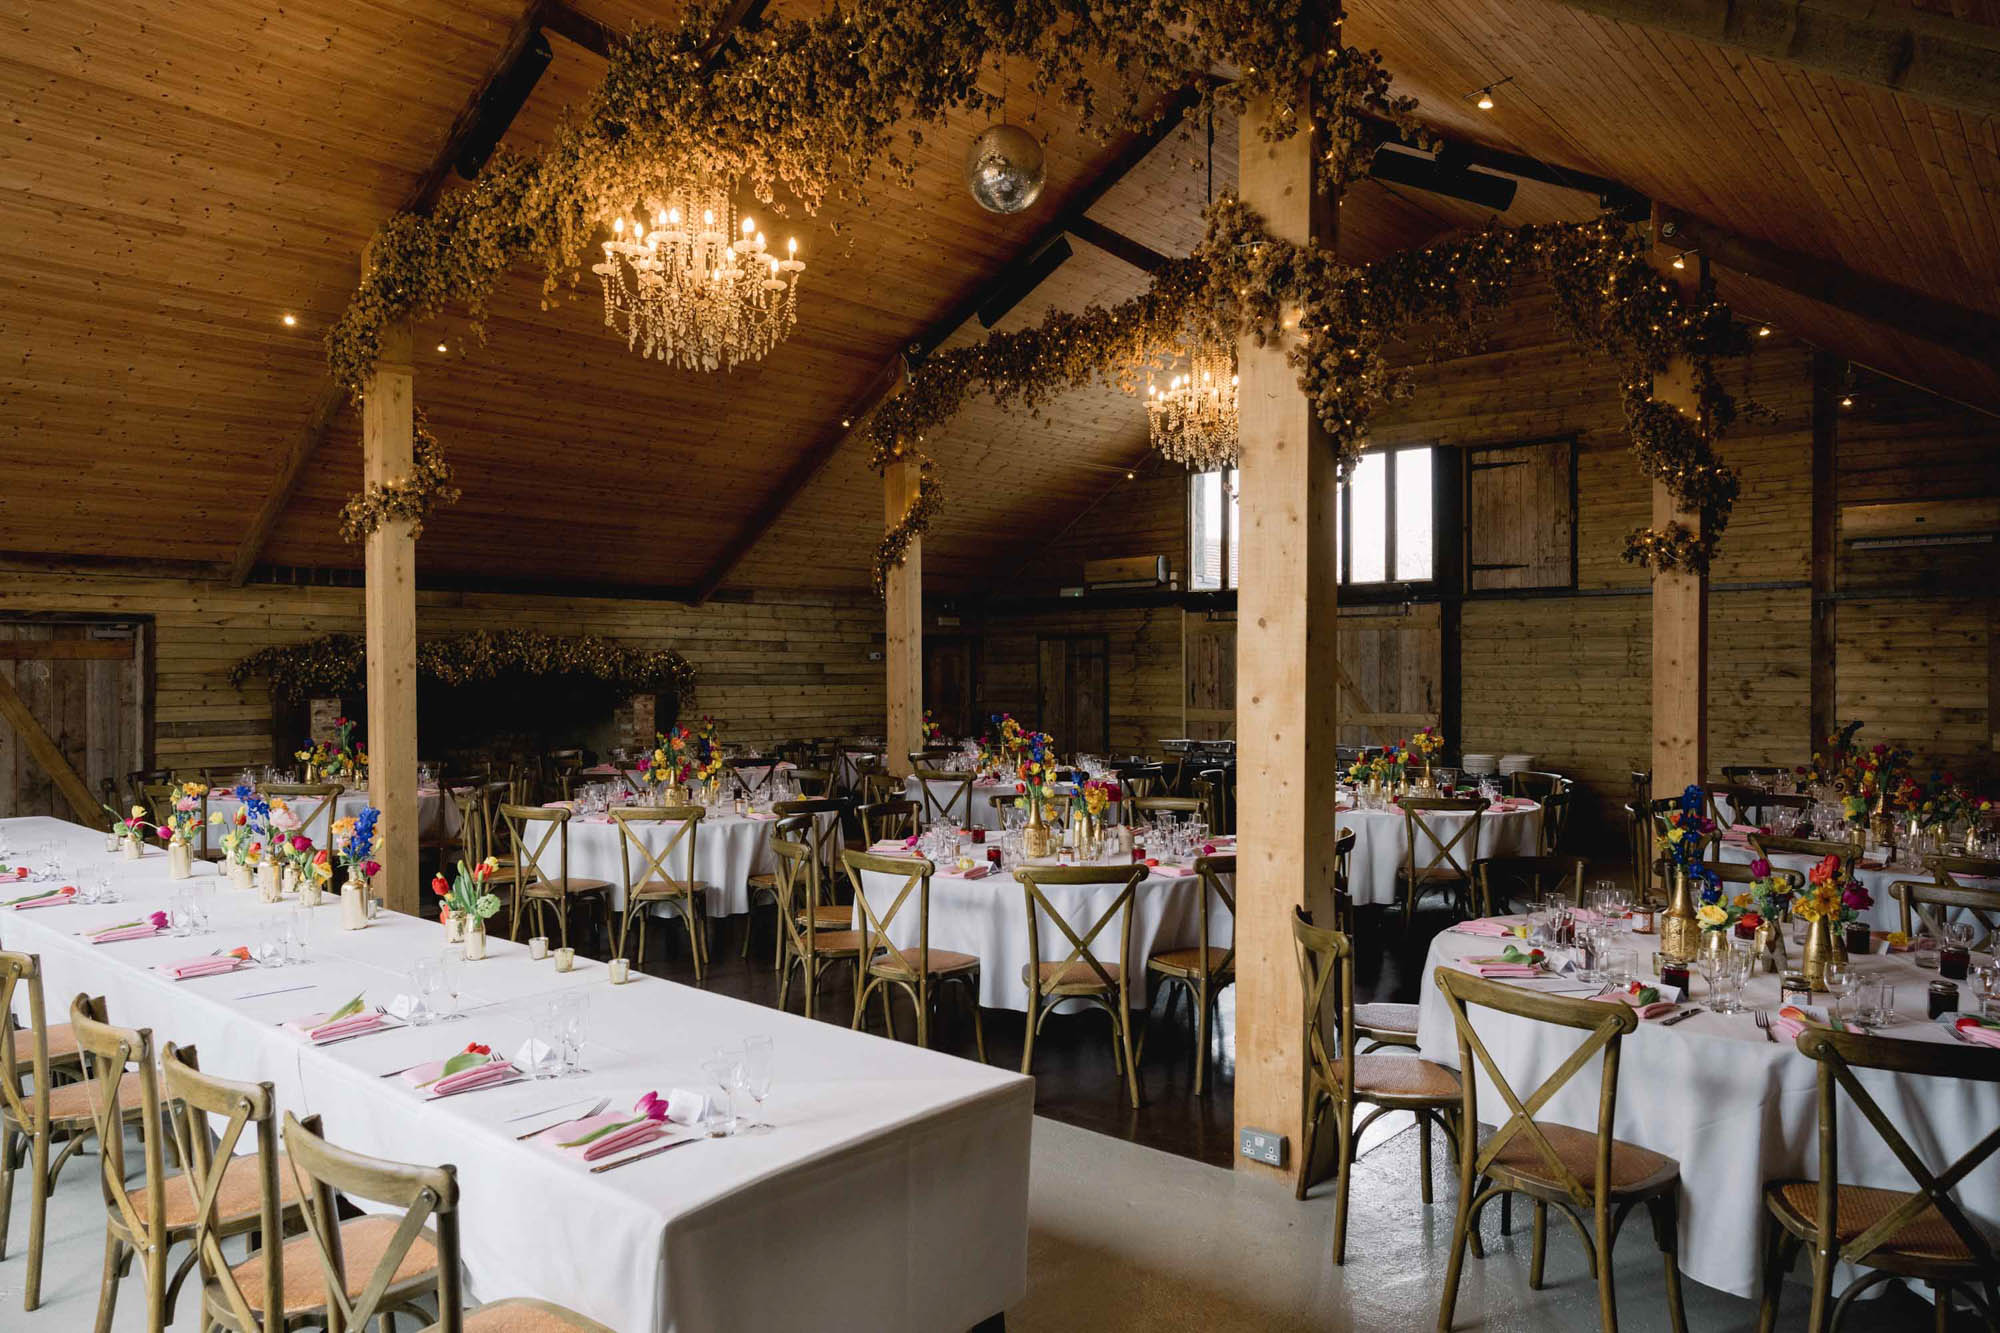 Interior of High Billinghurst Farm showing the wedding breakfast tables.